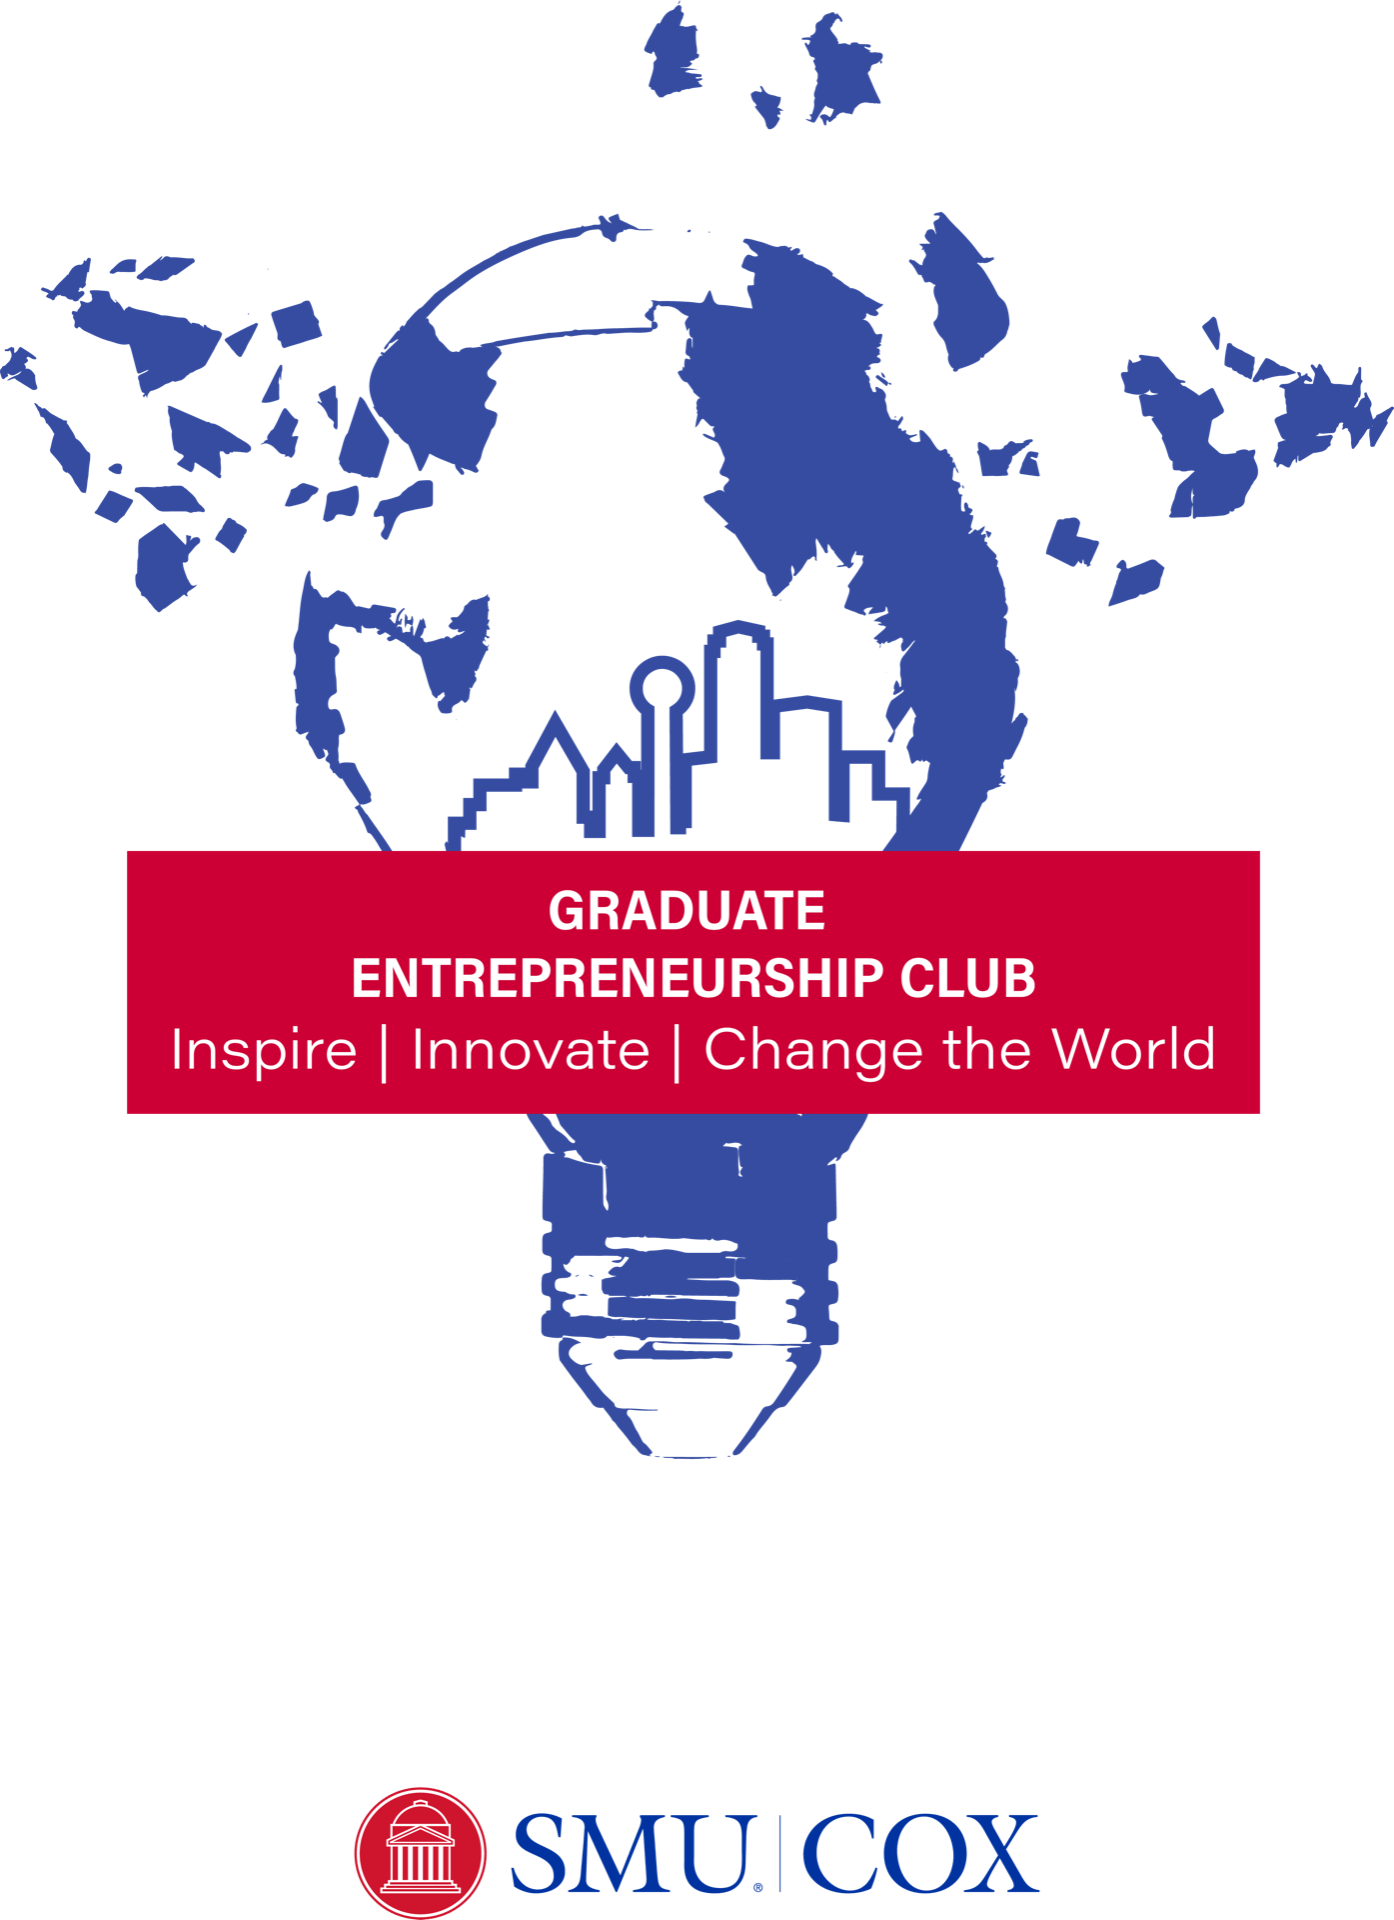 Cox Graduate Entrepreneurship Club